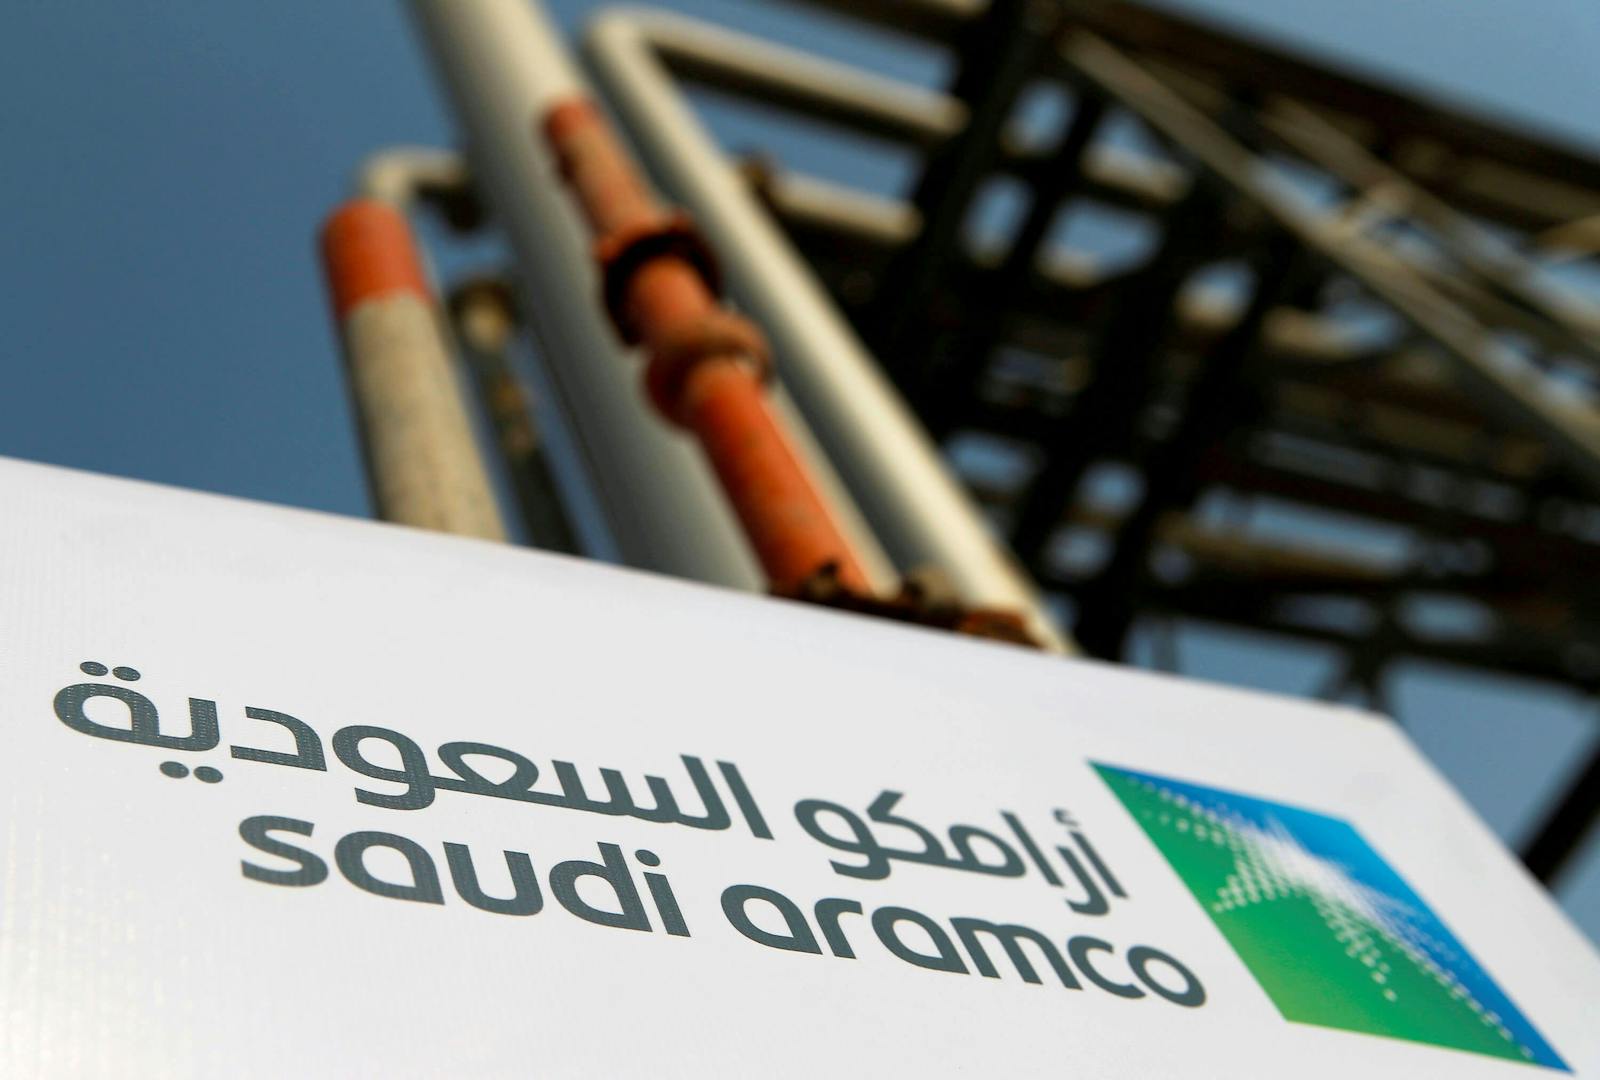 Aramco 013-year global contract with Saudi Aramco